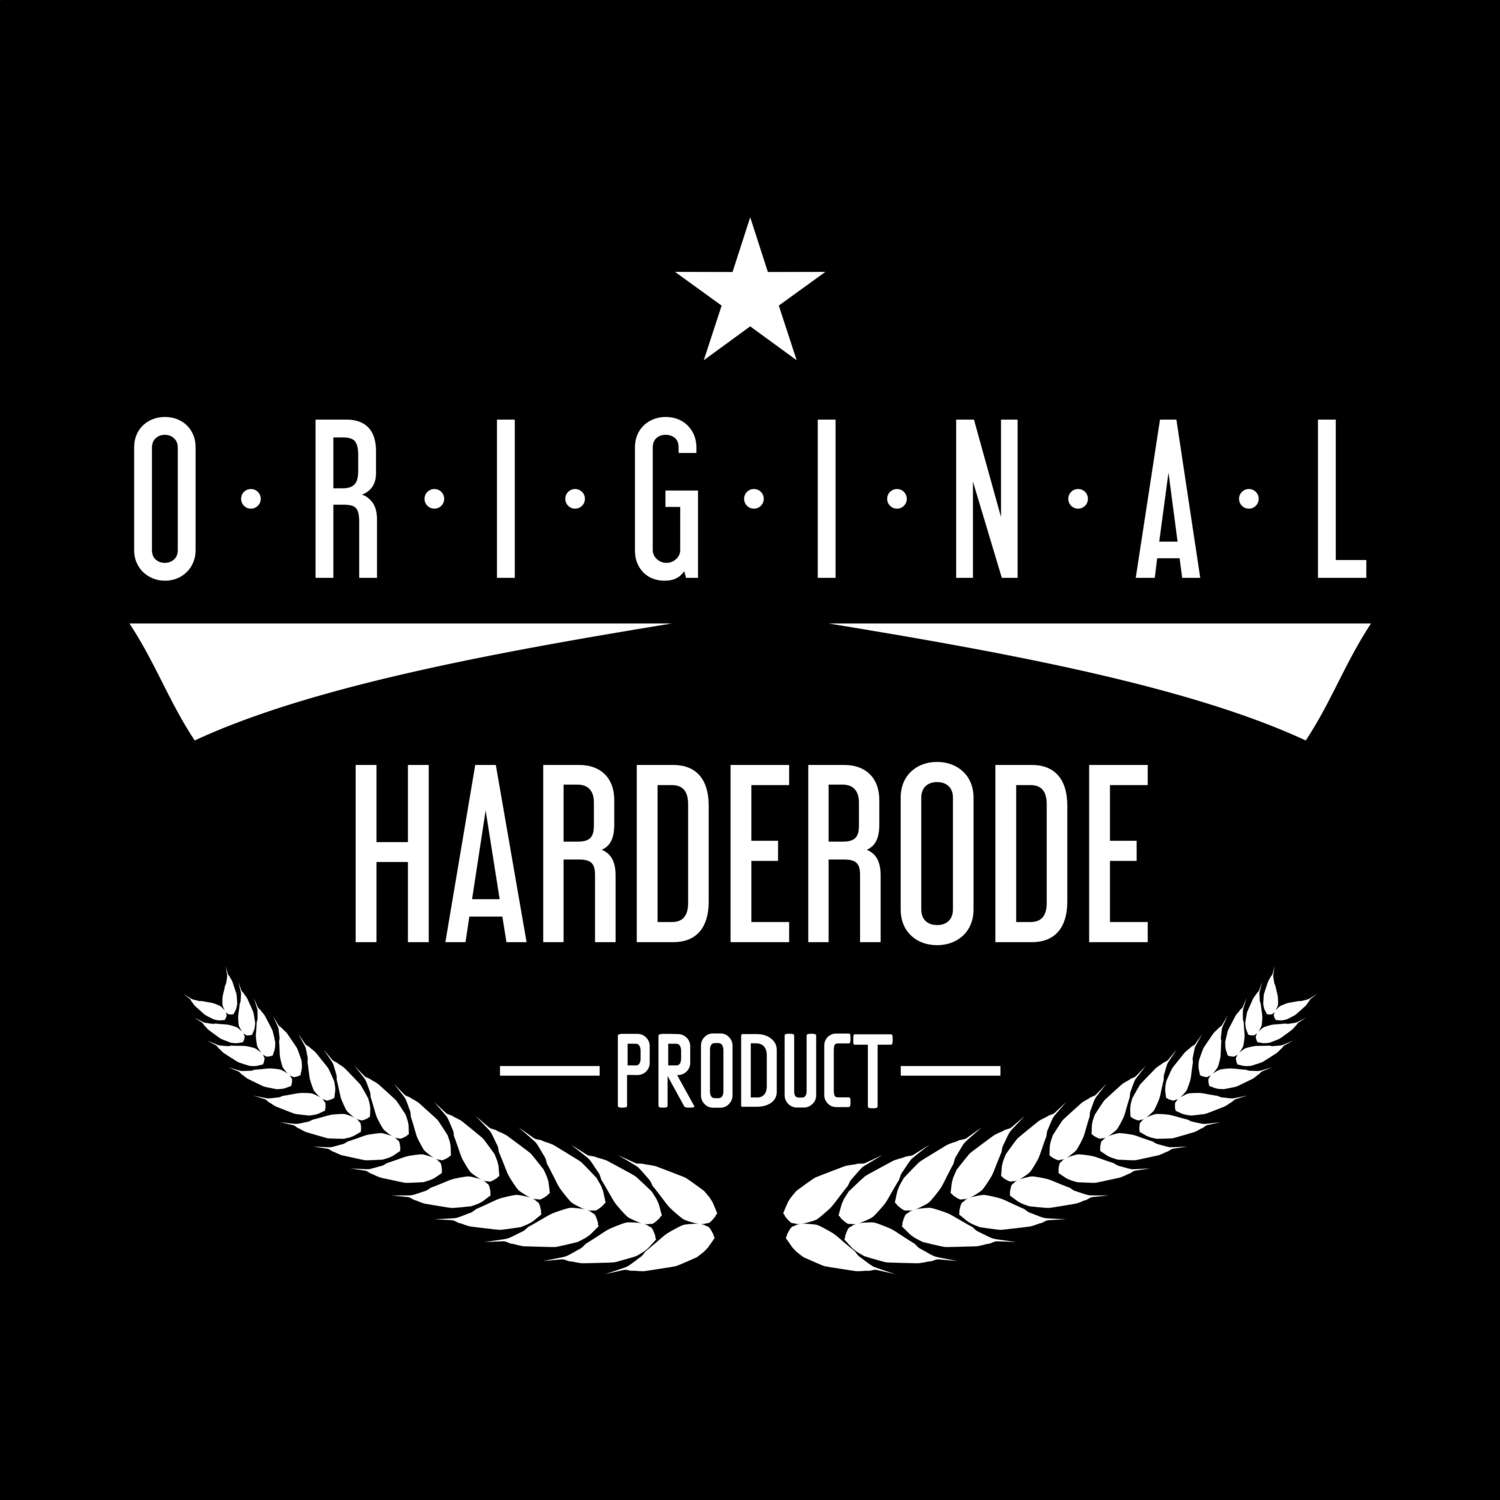 Harderode T-Shirt »Original Product«